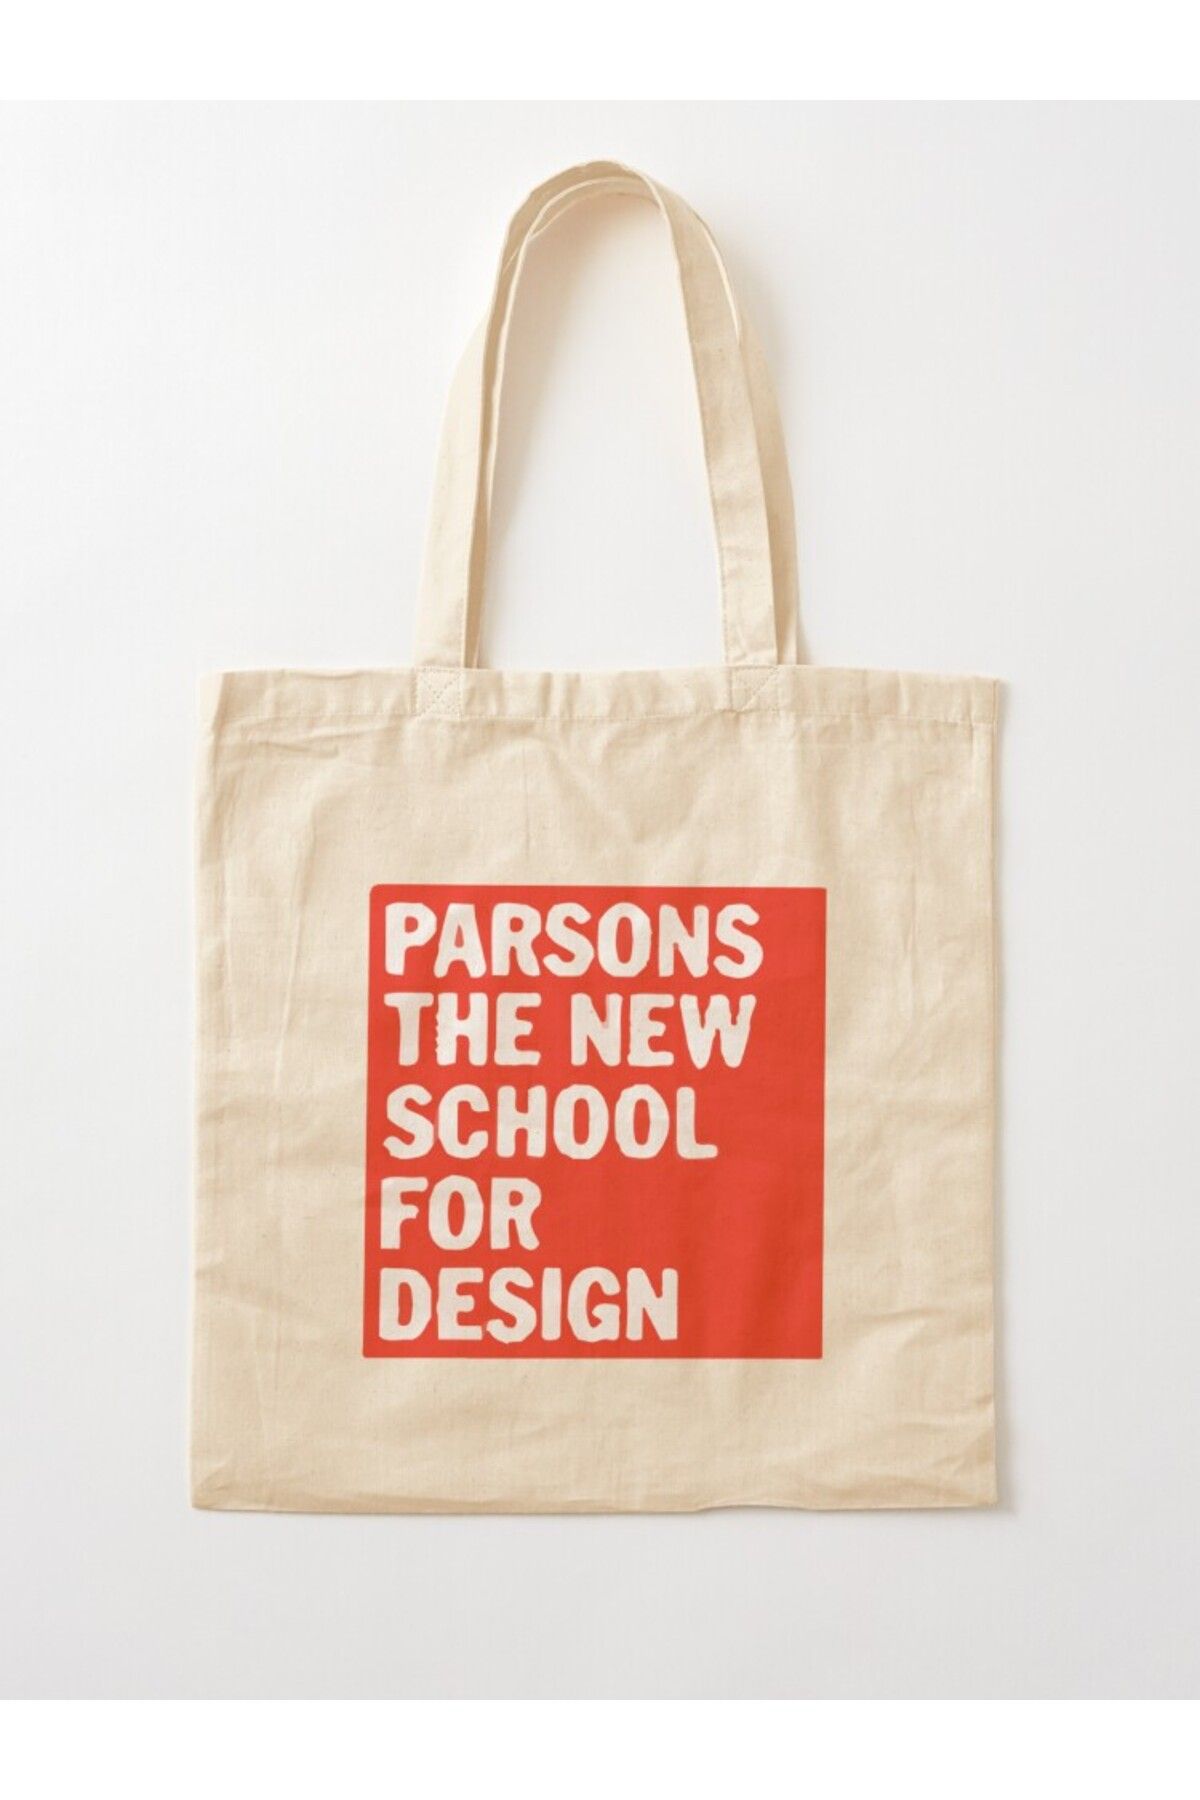 w house Körüklü Bez Omuz Çantası 13707 - Parsons the new school of design ad fashion